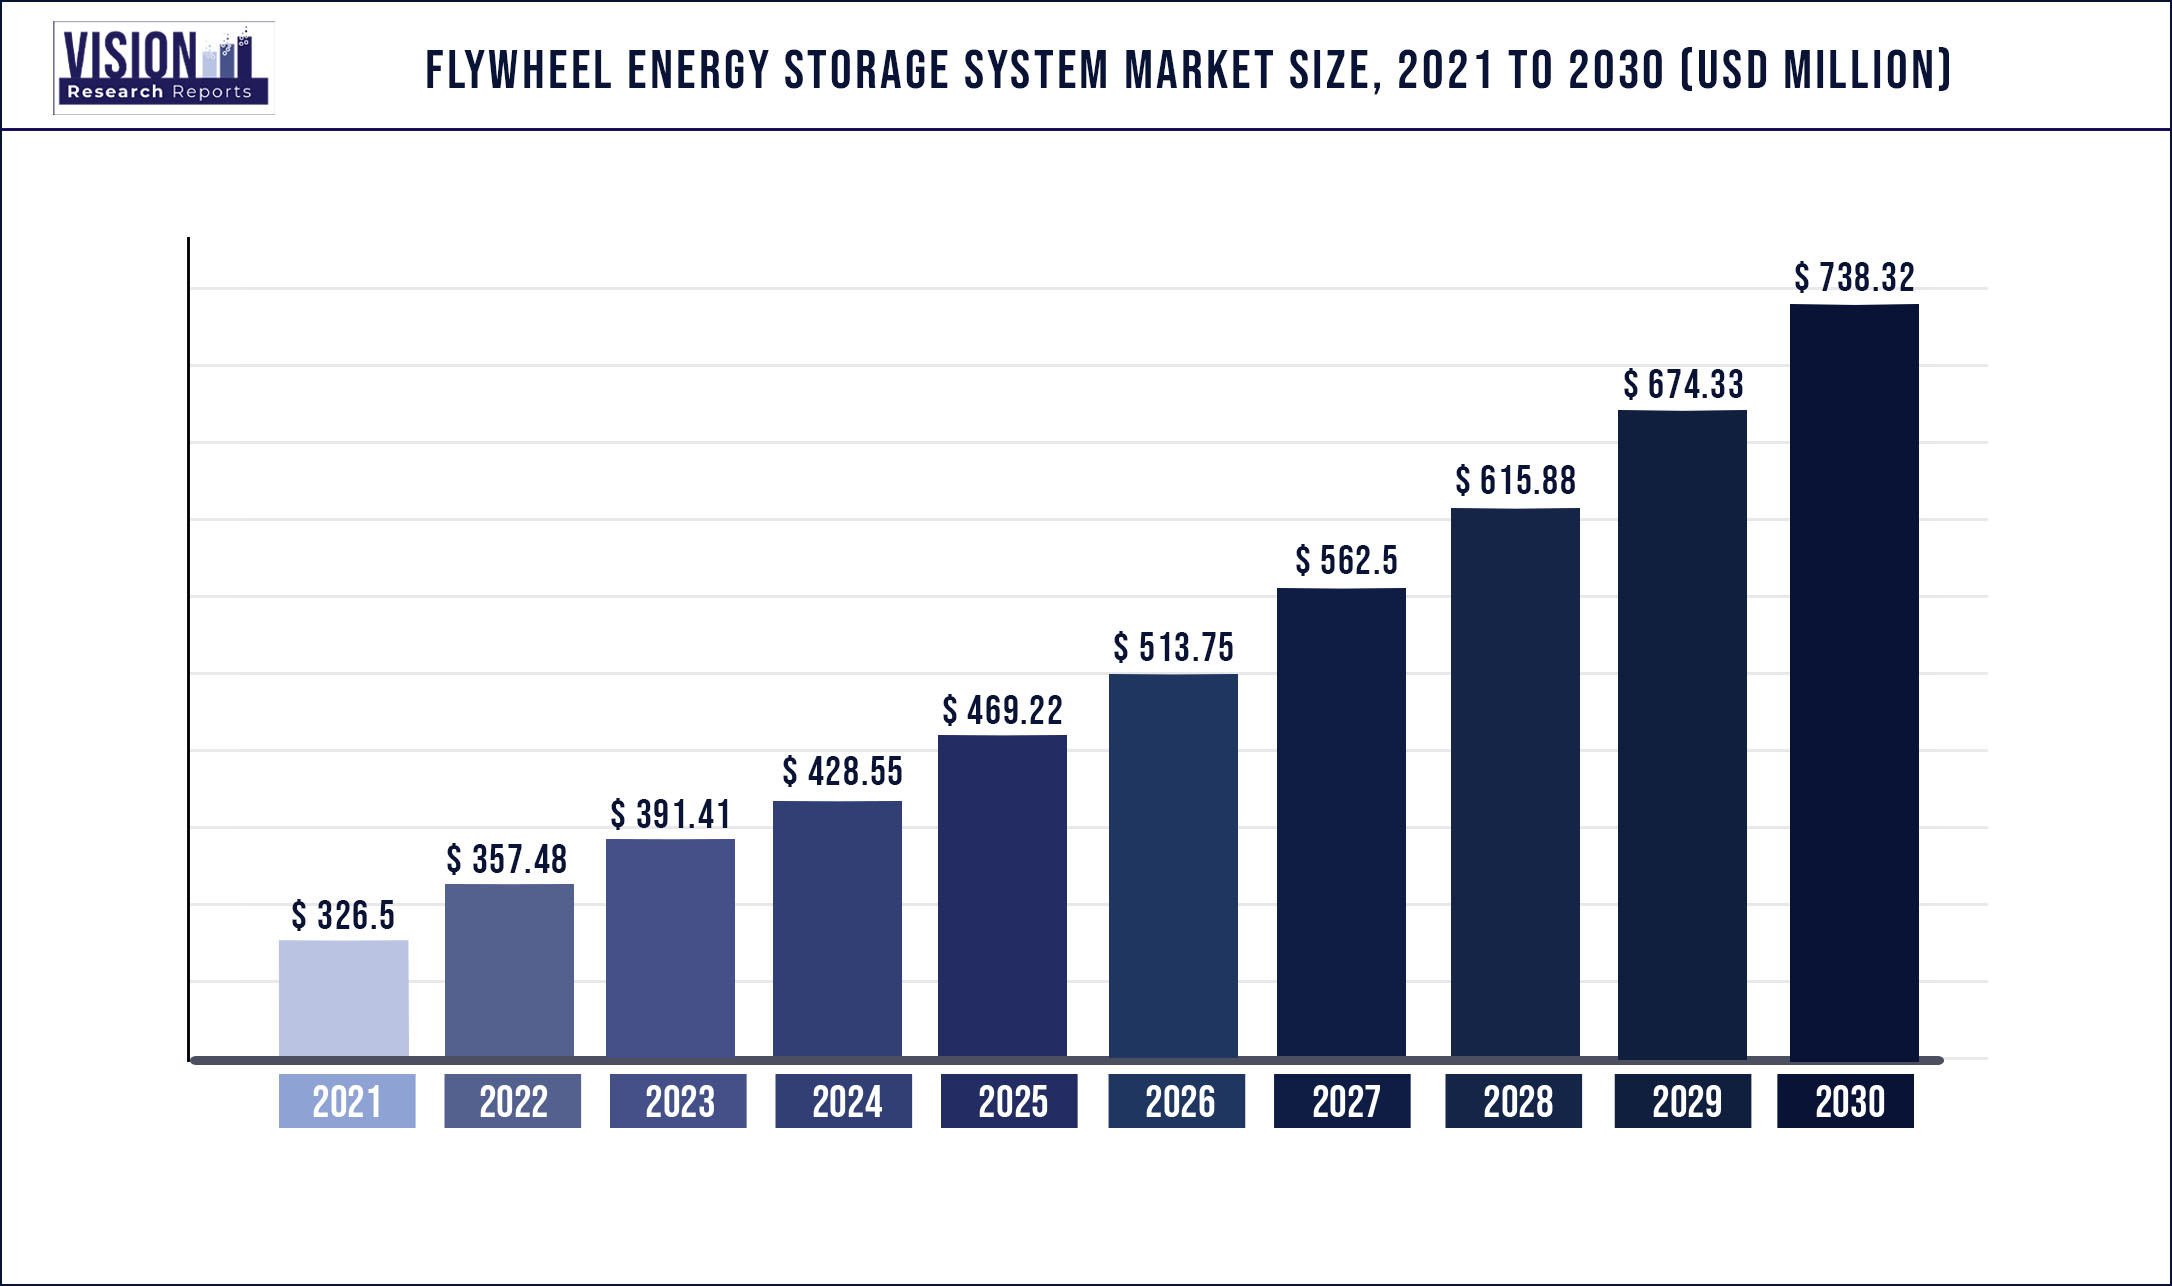 Flywheel Energy Storage System Market Size 2021 to 2030